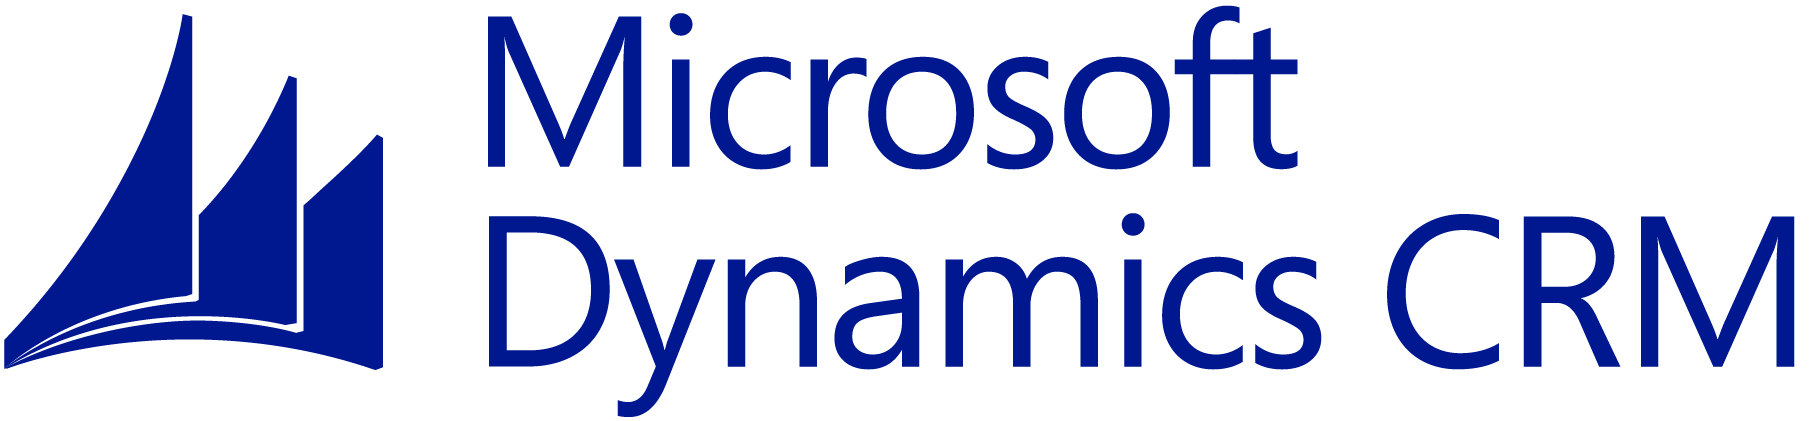 QuoteWerks + Microsoft Dynamics CRM